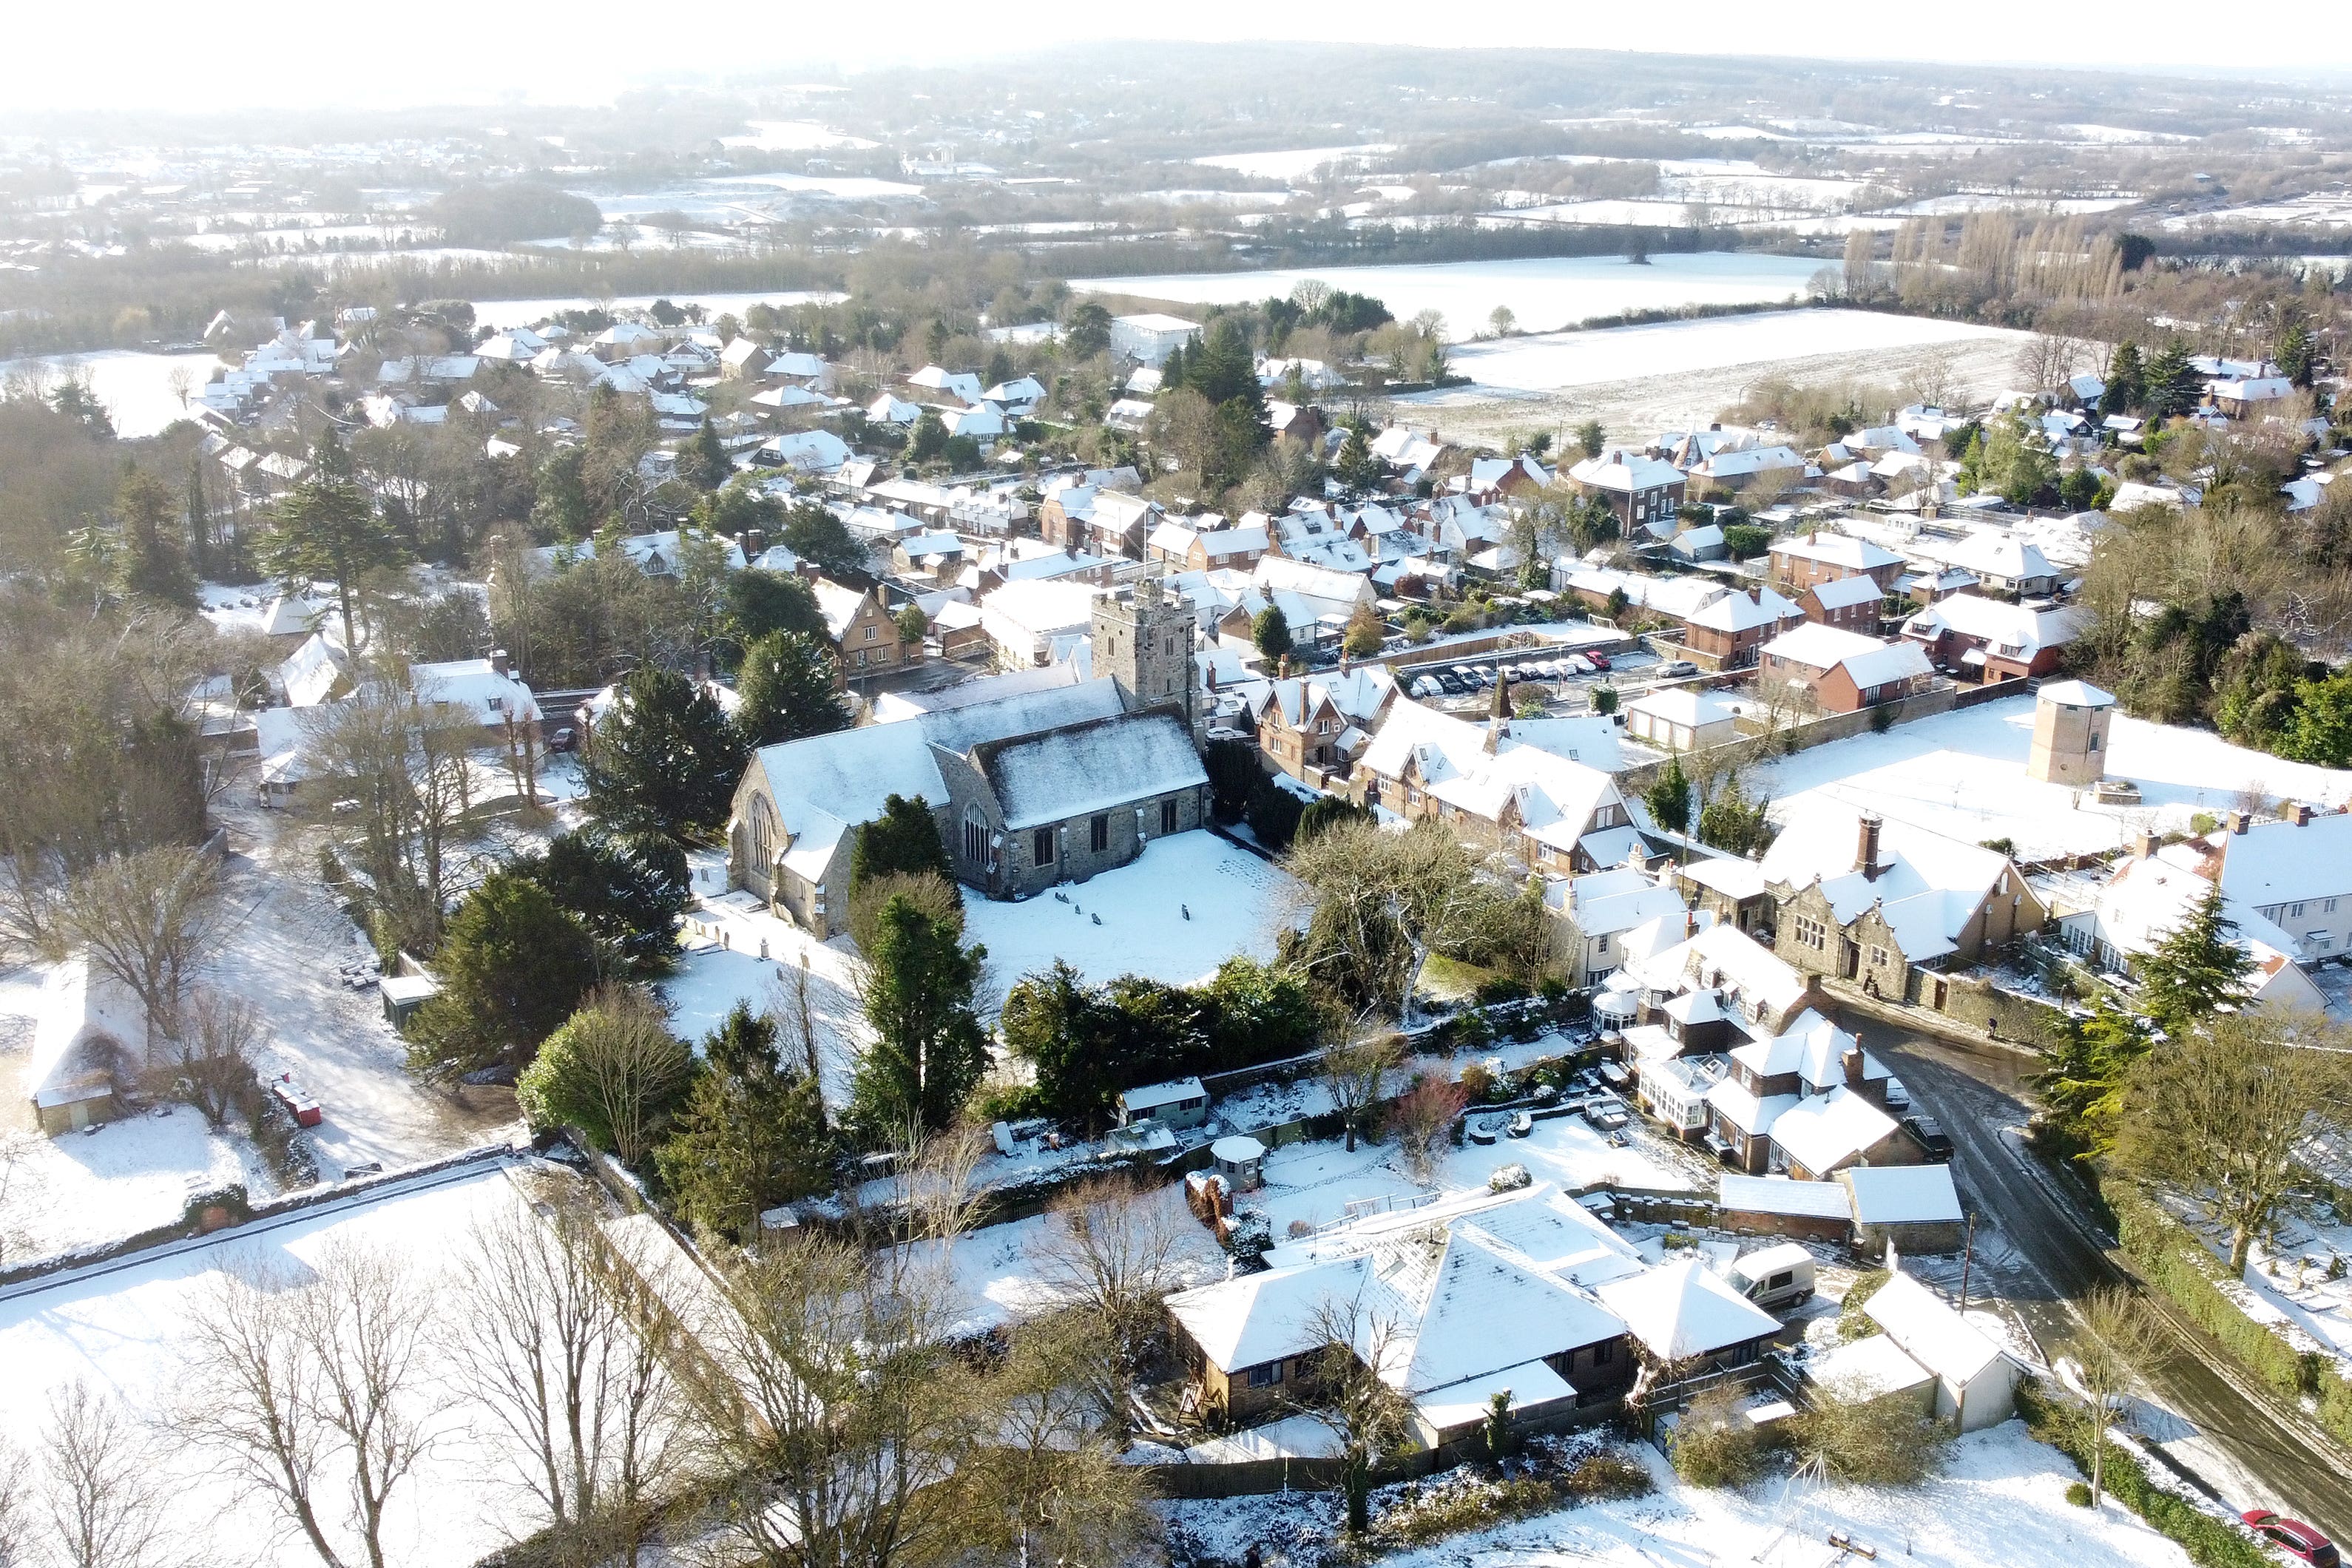 Snow blanketing the village of Wrotham in Kent